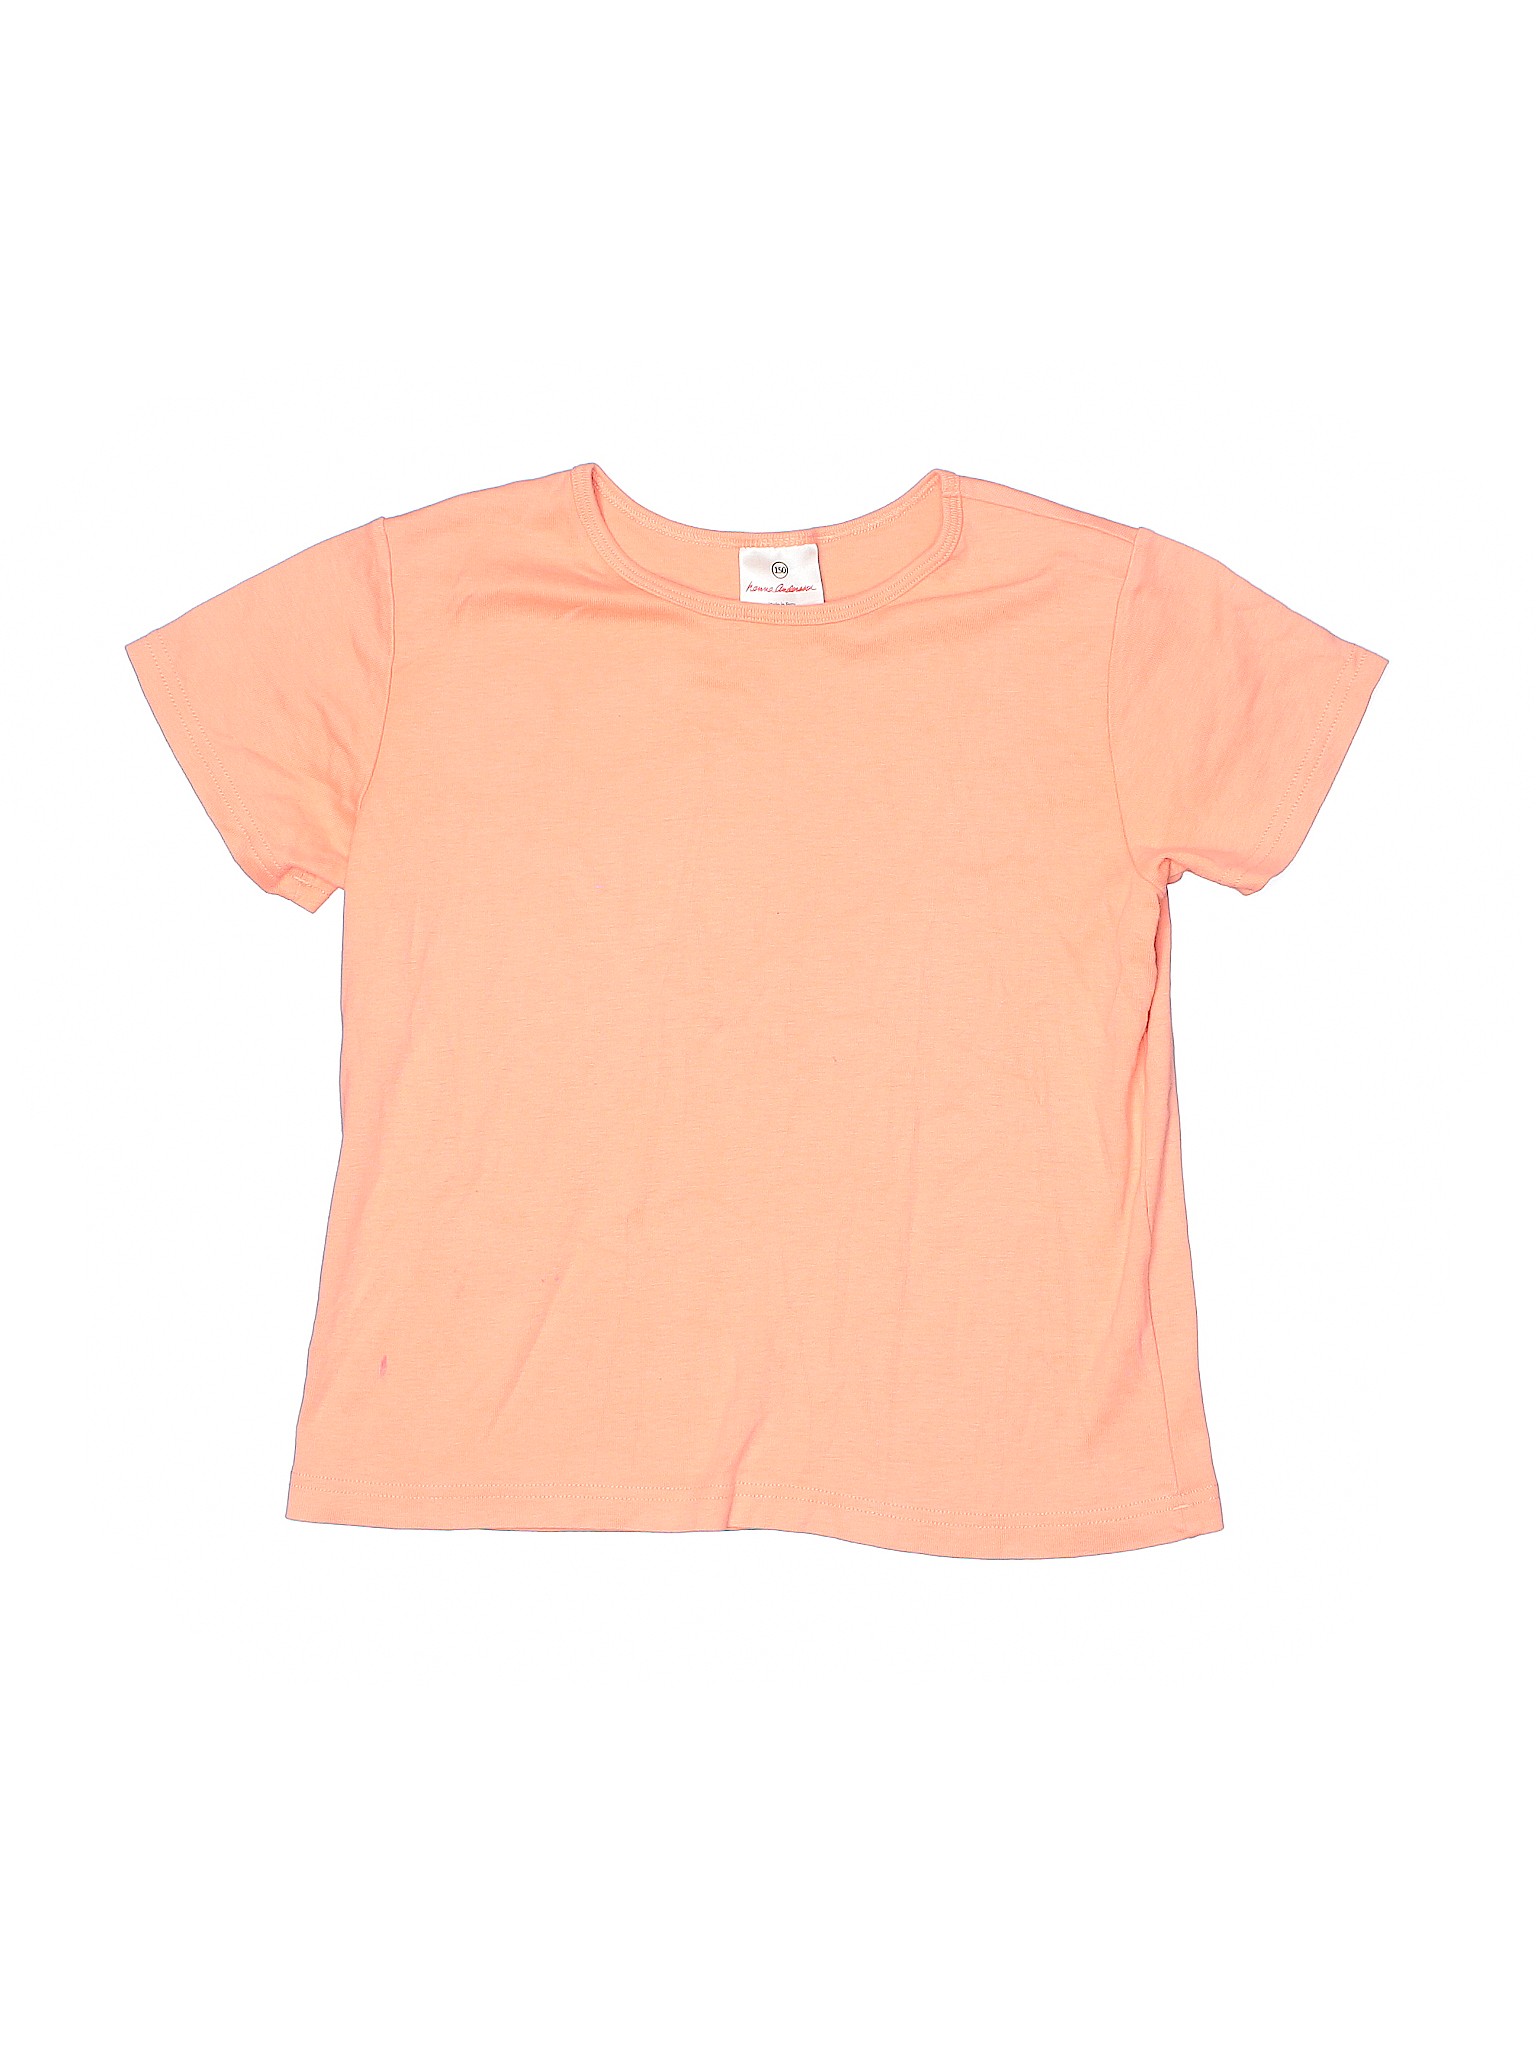 Hanna Andersson Girls Pink Short Sleeve T-Shirt 150 cm | eBay